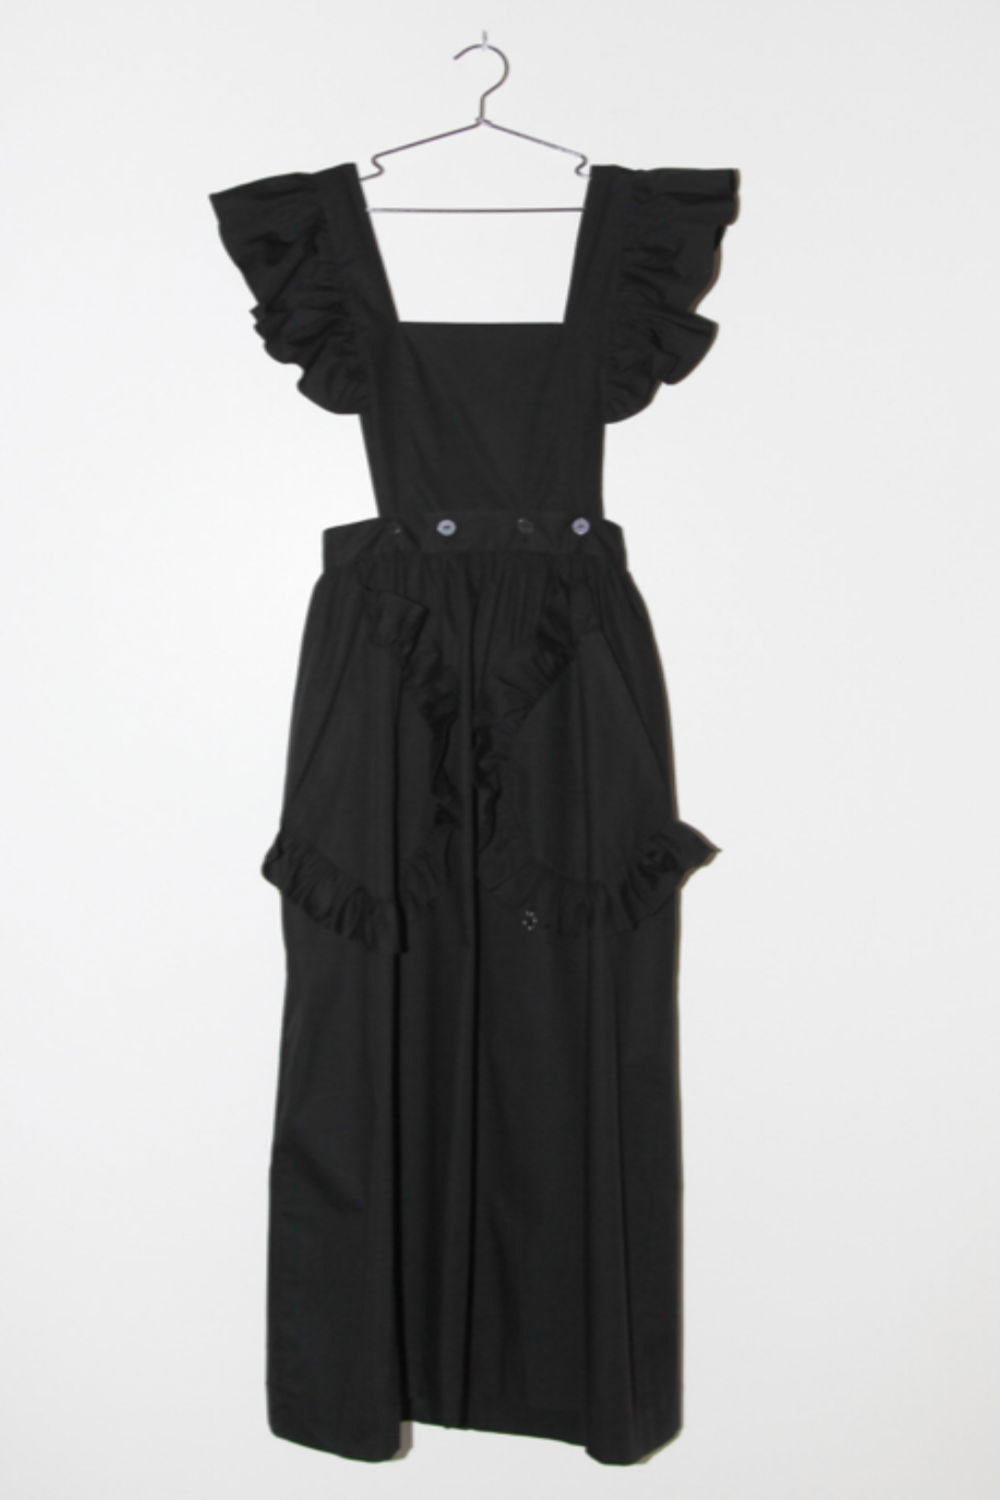 Kkco - Lulu Apron Dress: Black